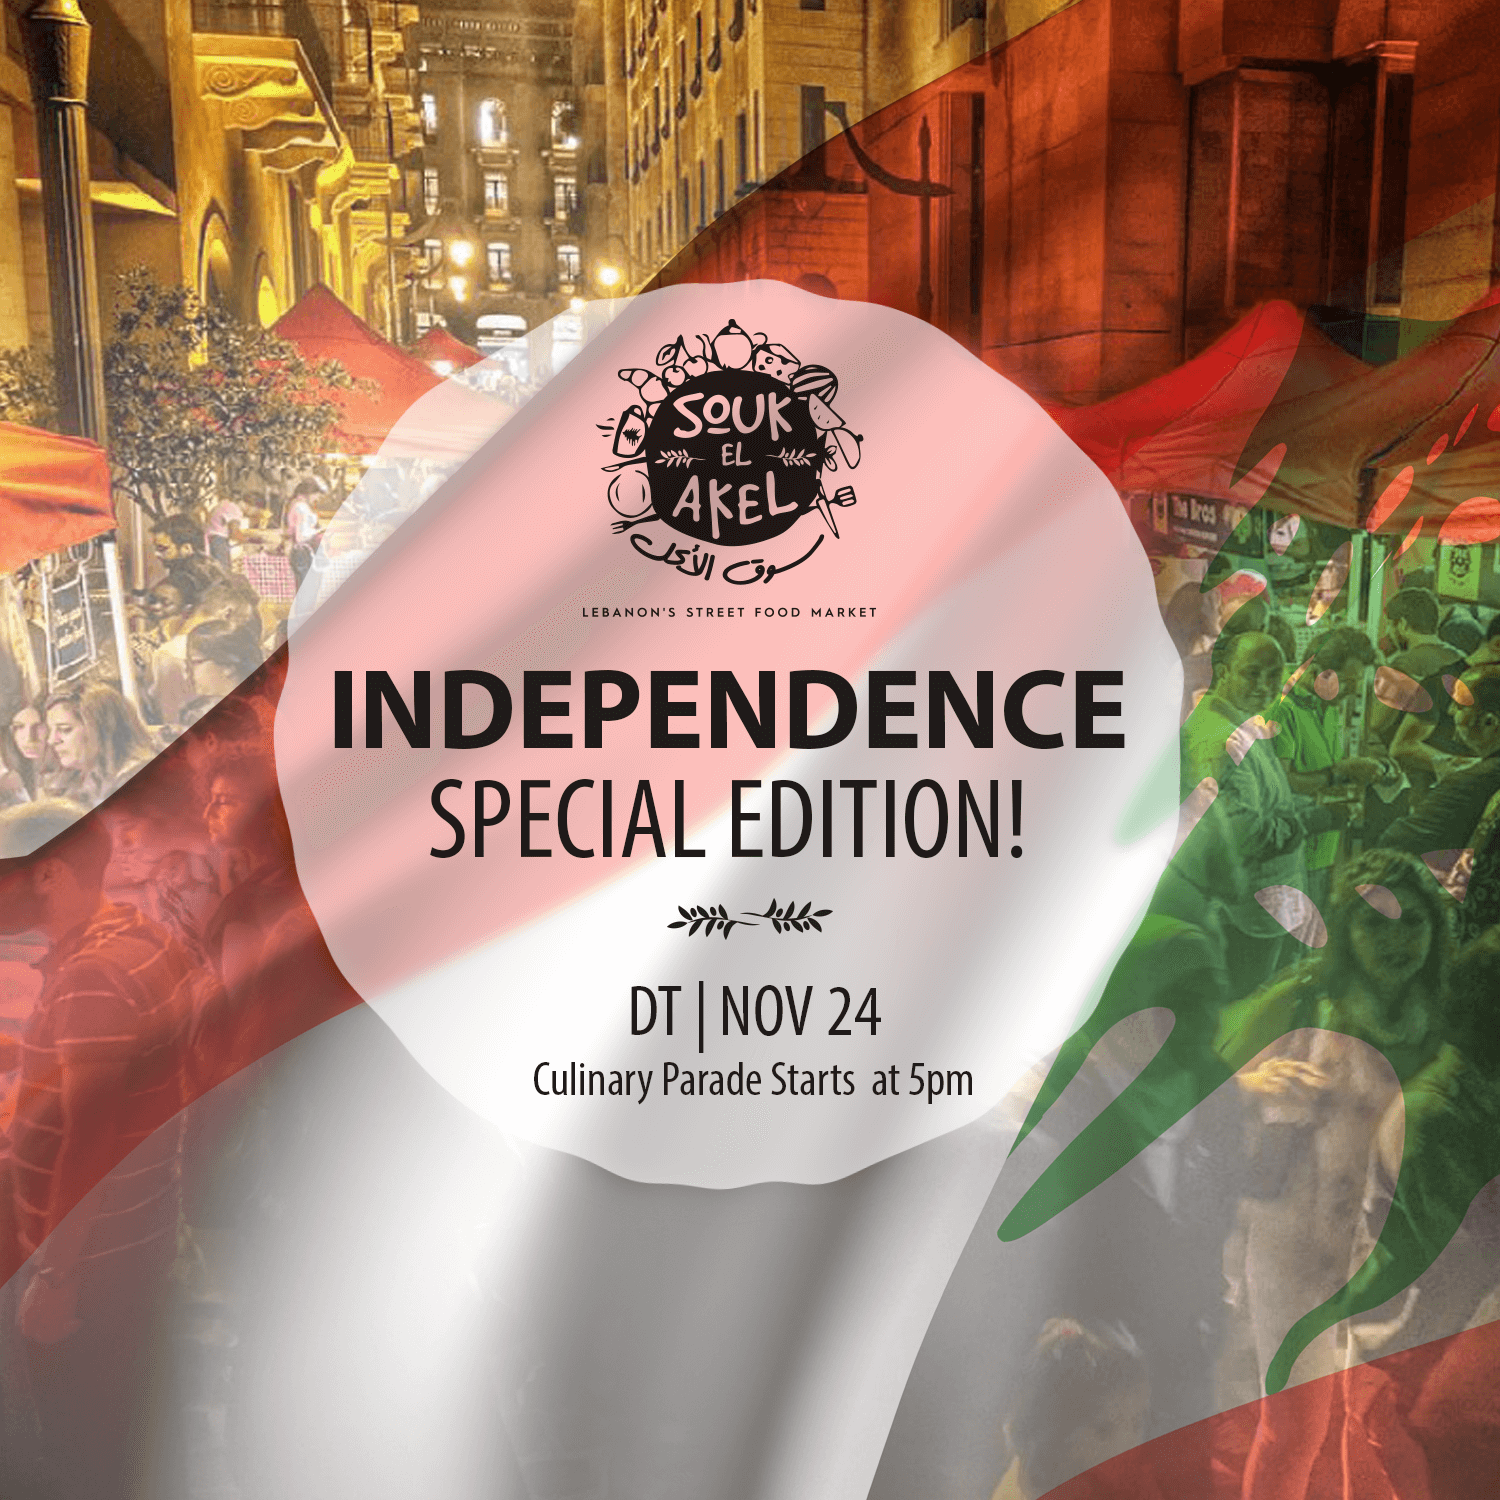 Souk-el-Akl-FB-independence-edition-20161123